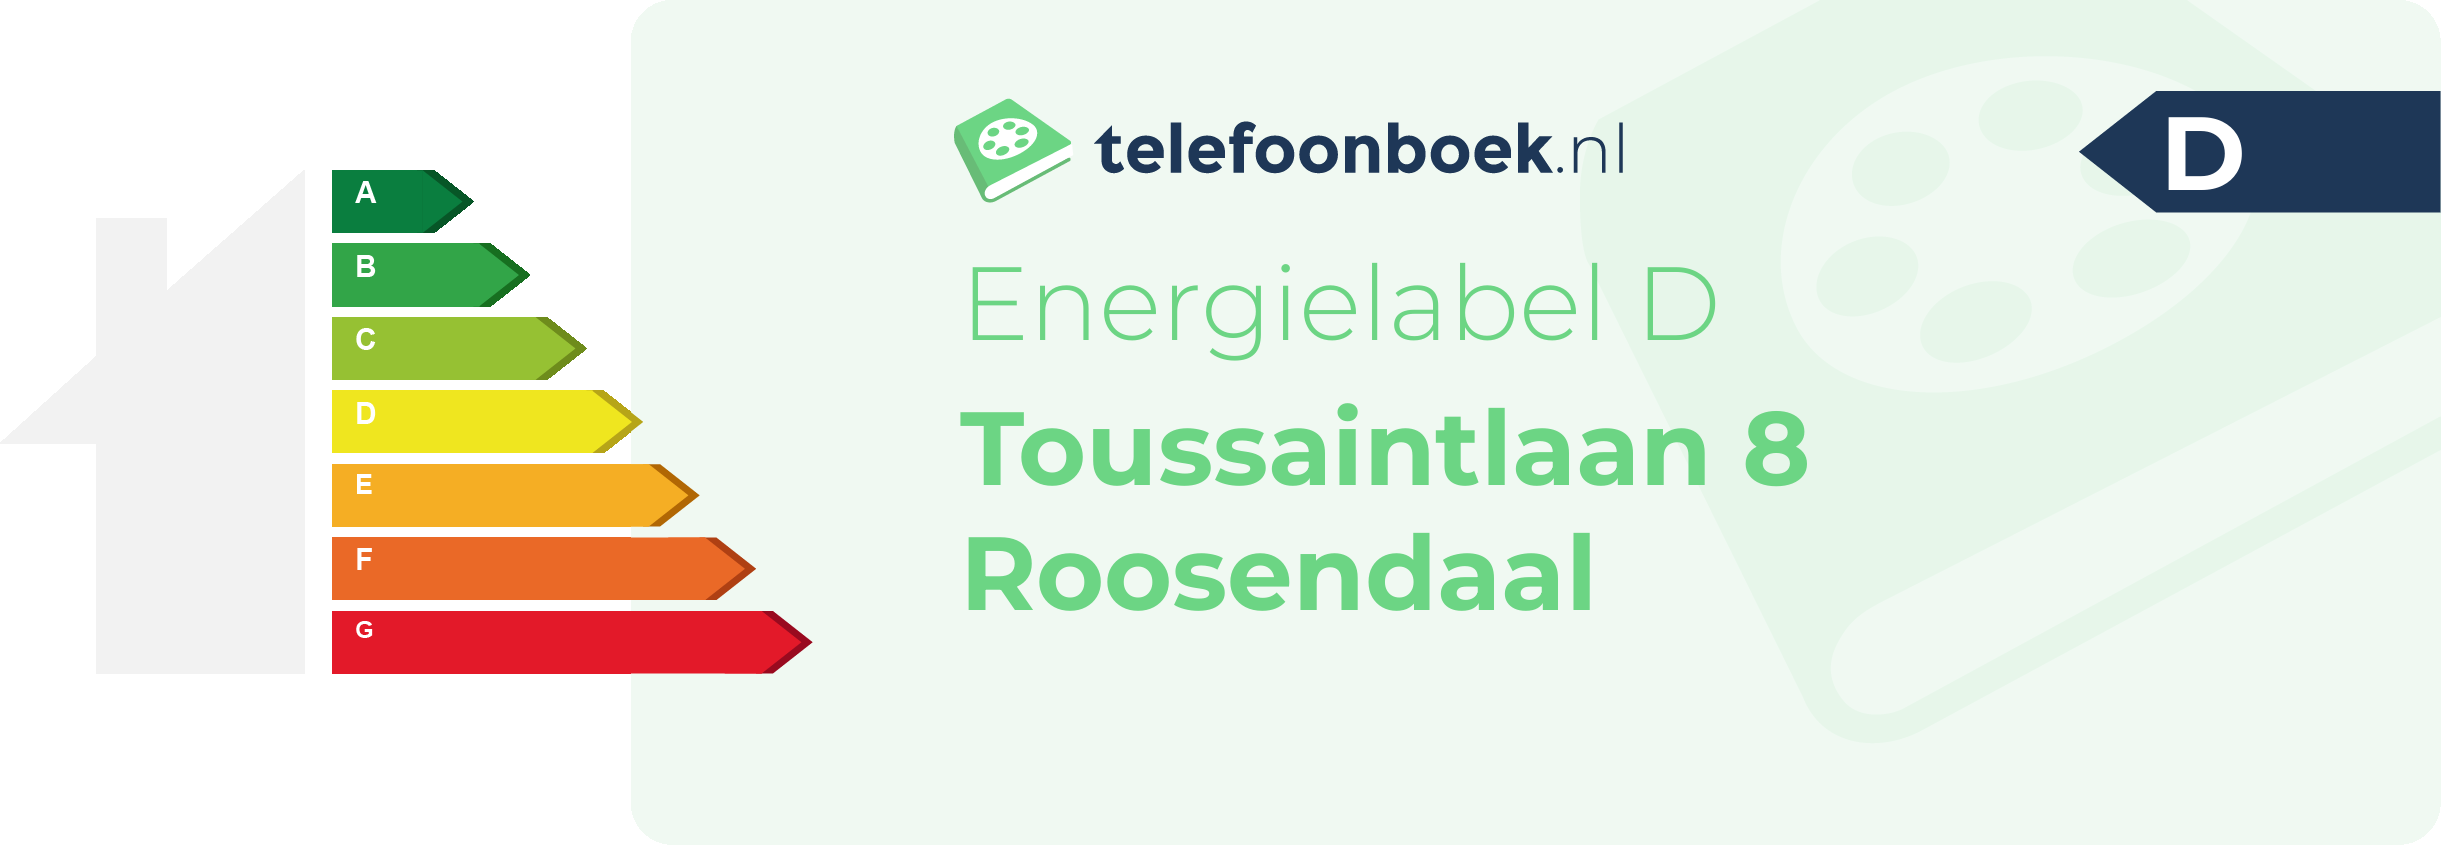 Energielabel Toussaintlaan 8 Roosendaal